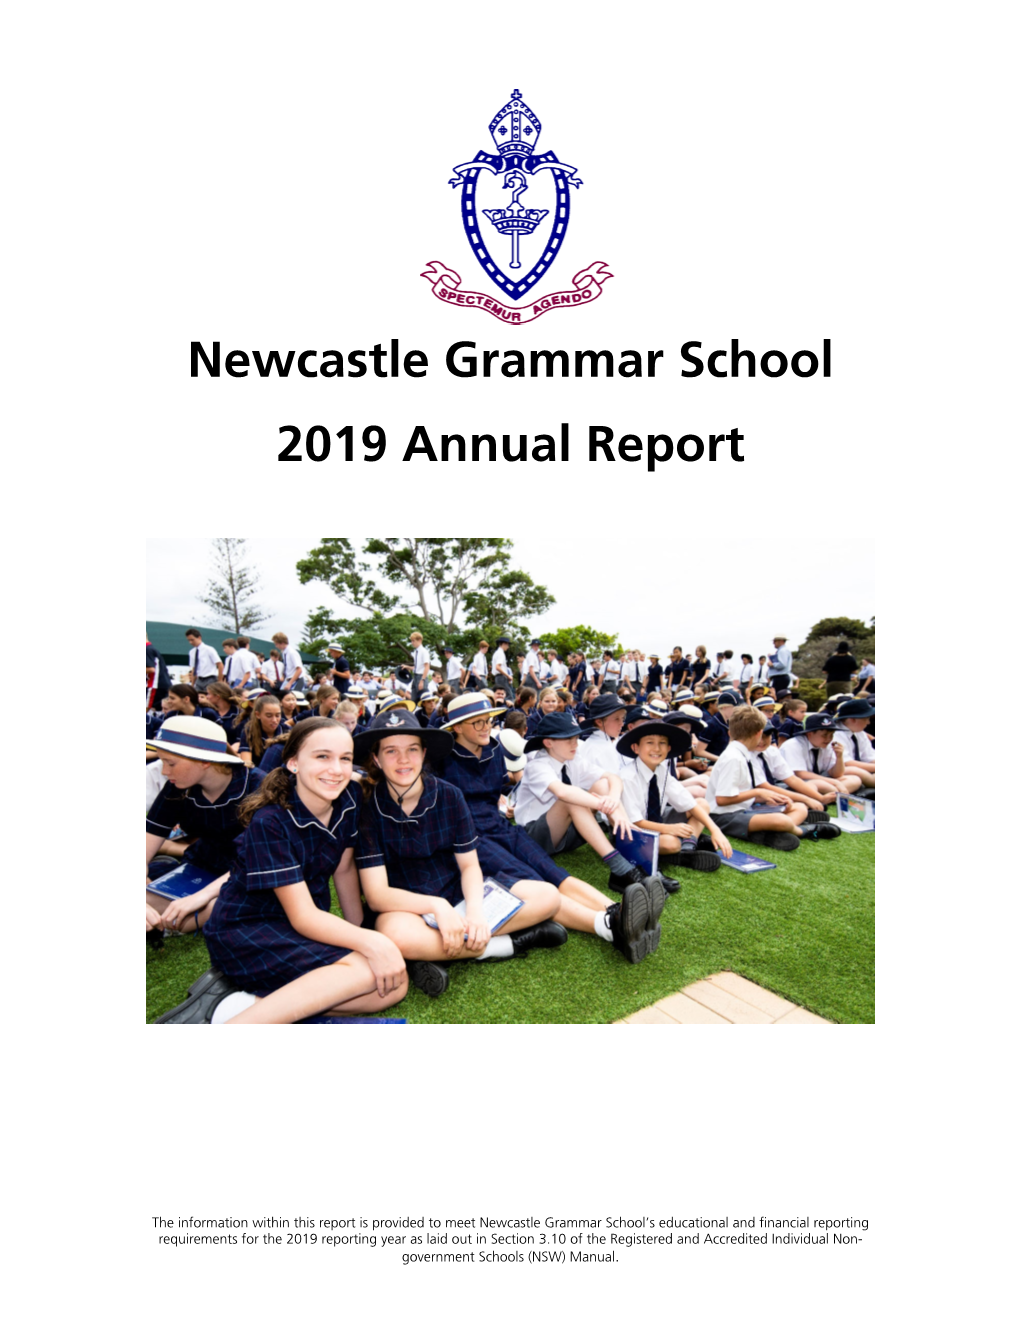 Newcastle Grammar School 2019 Annual Report